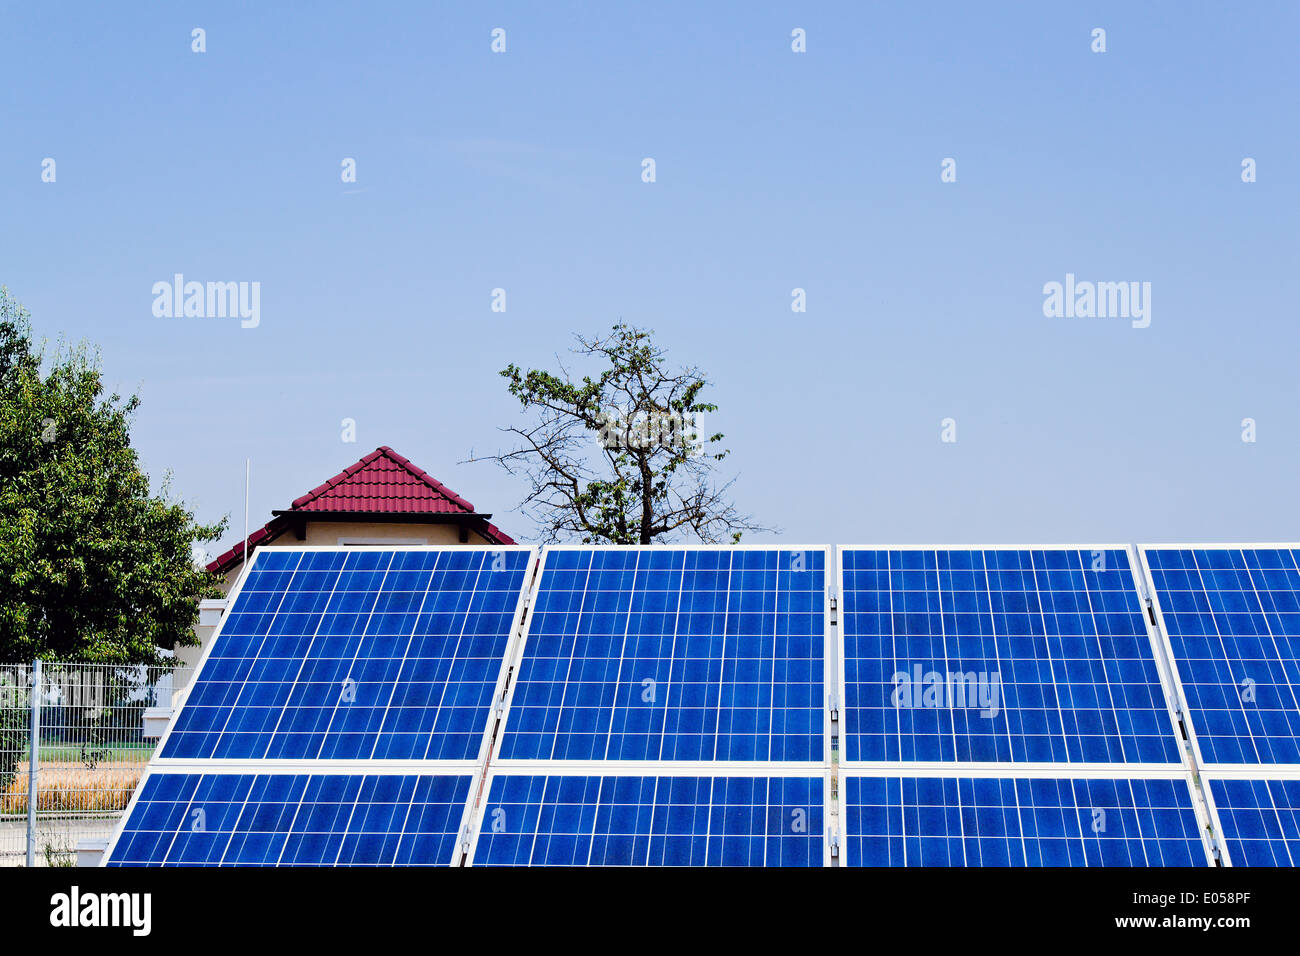 Rigenerativa, alternativa di energia solare. Energia solare power station. alternative di energia solare Energie. Sonnenenergie Kraftwerk. Foto Stock